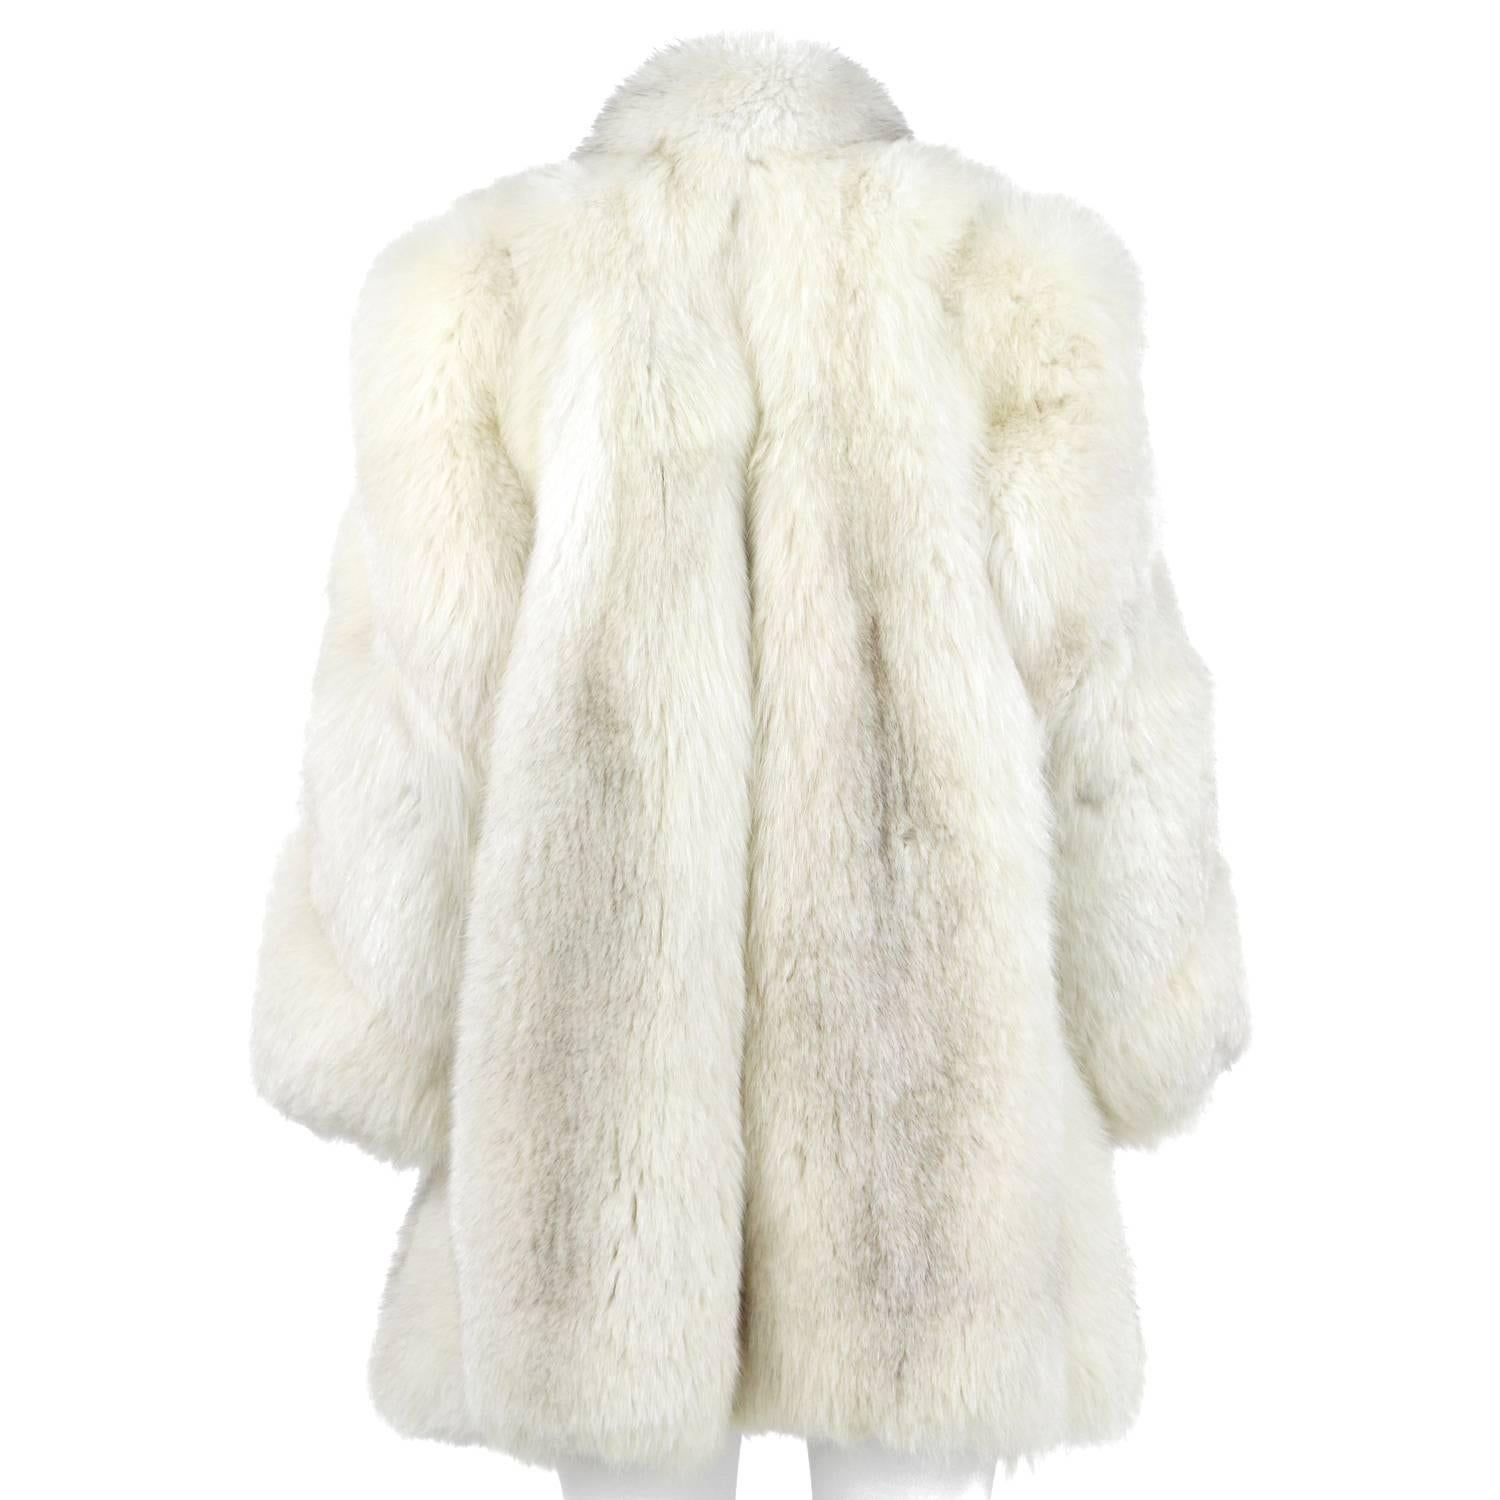 1980s fur coat